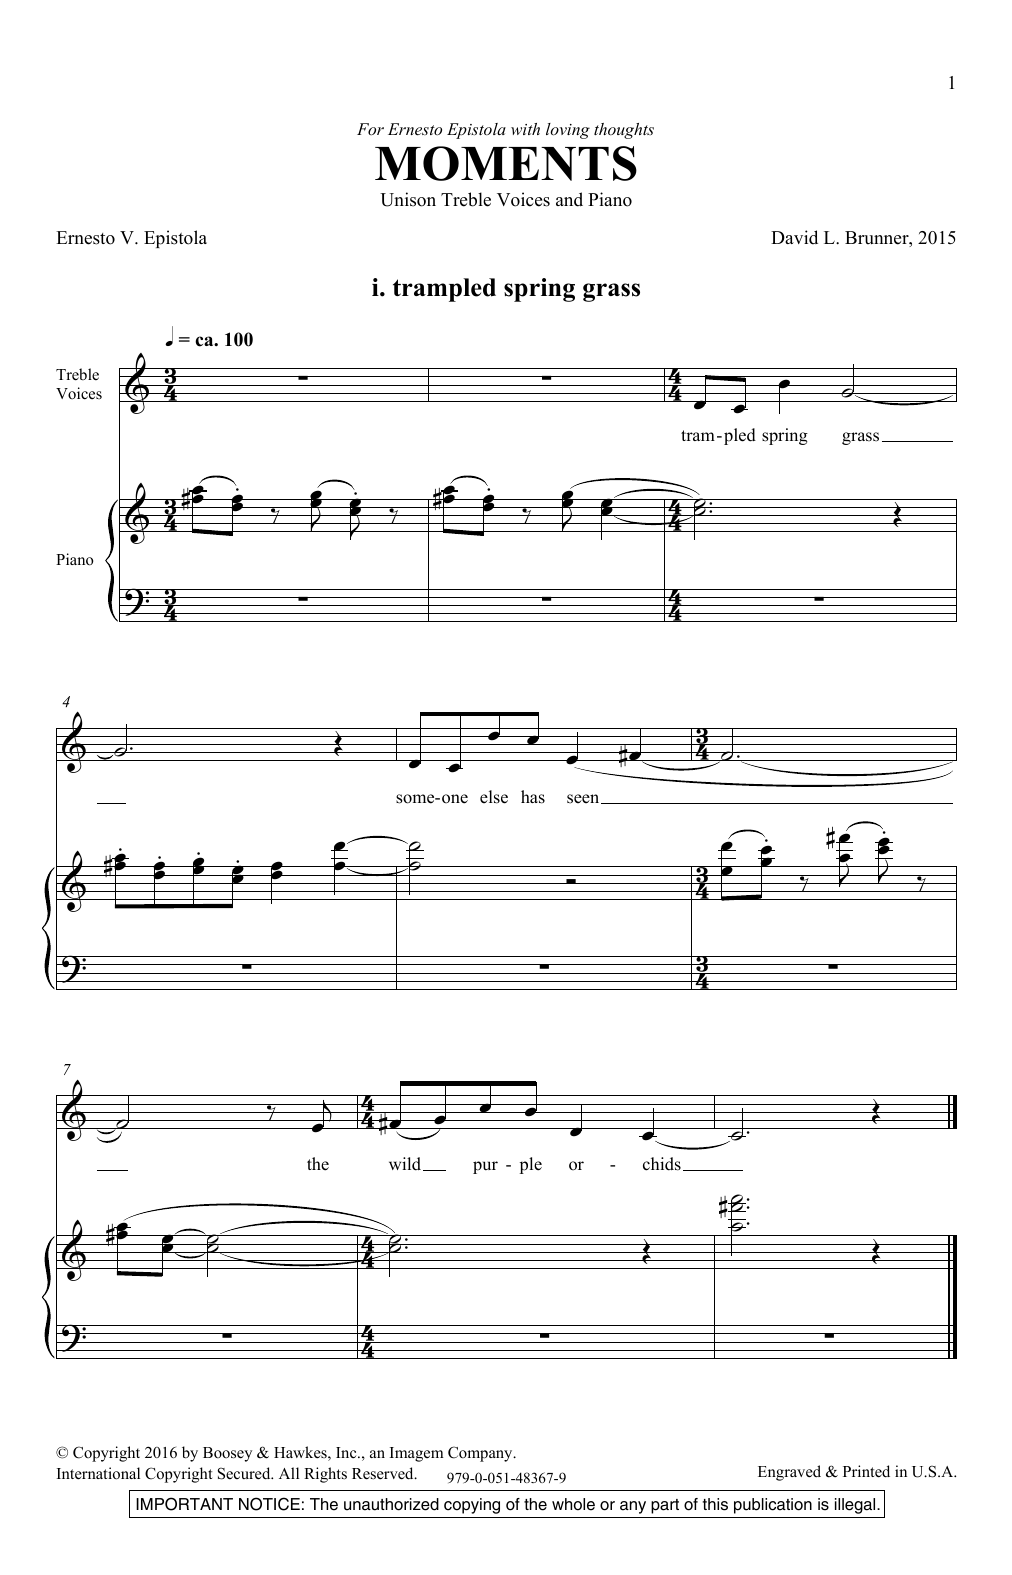 David Brunner Moments Sheet Music Notes & Chords for Unison Choral - Download or Print PDF